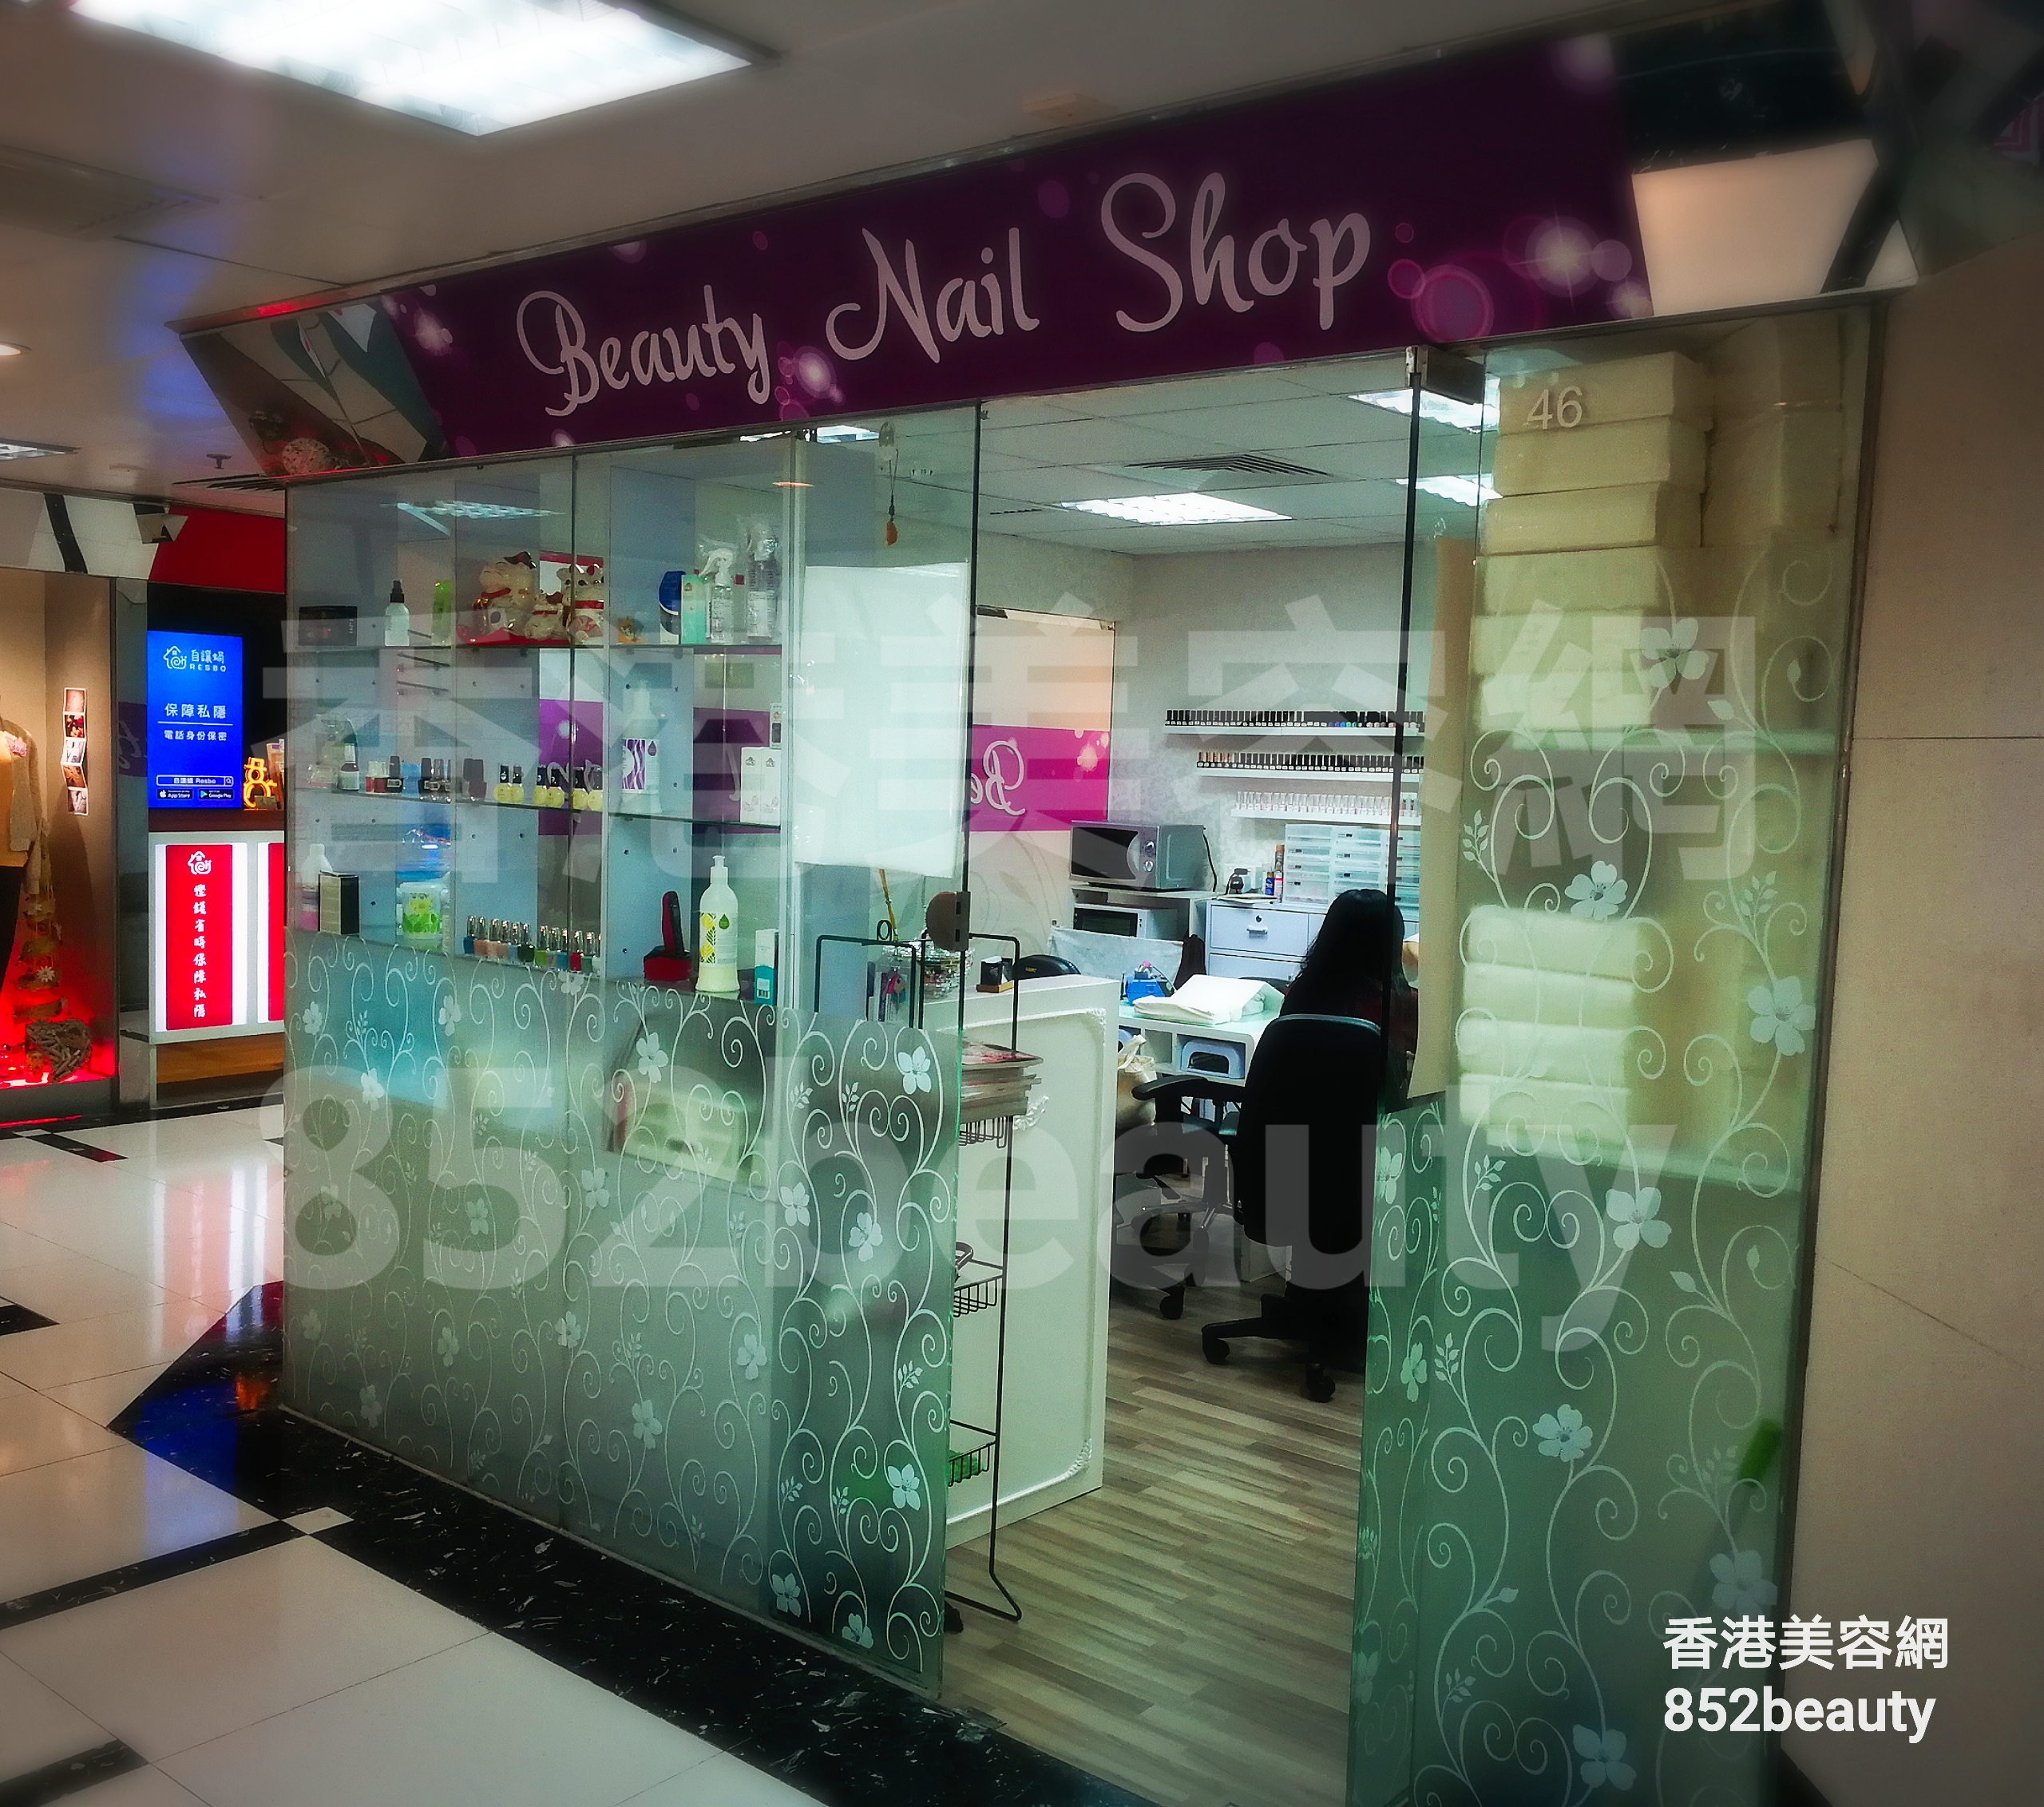 香港美容網 Hong Kong Beauty Salon 美容院 / 美容師: Beauty Nail Shop